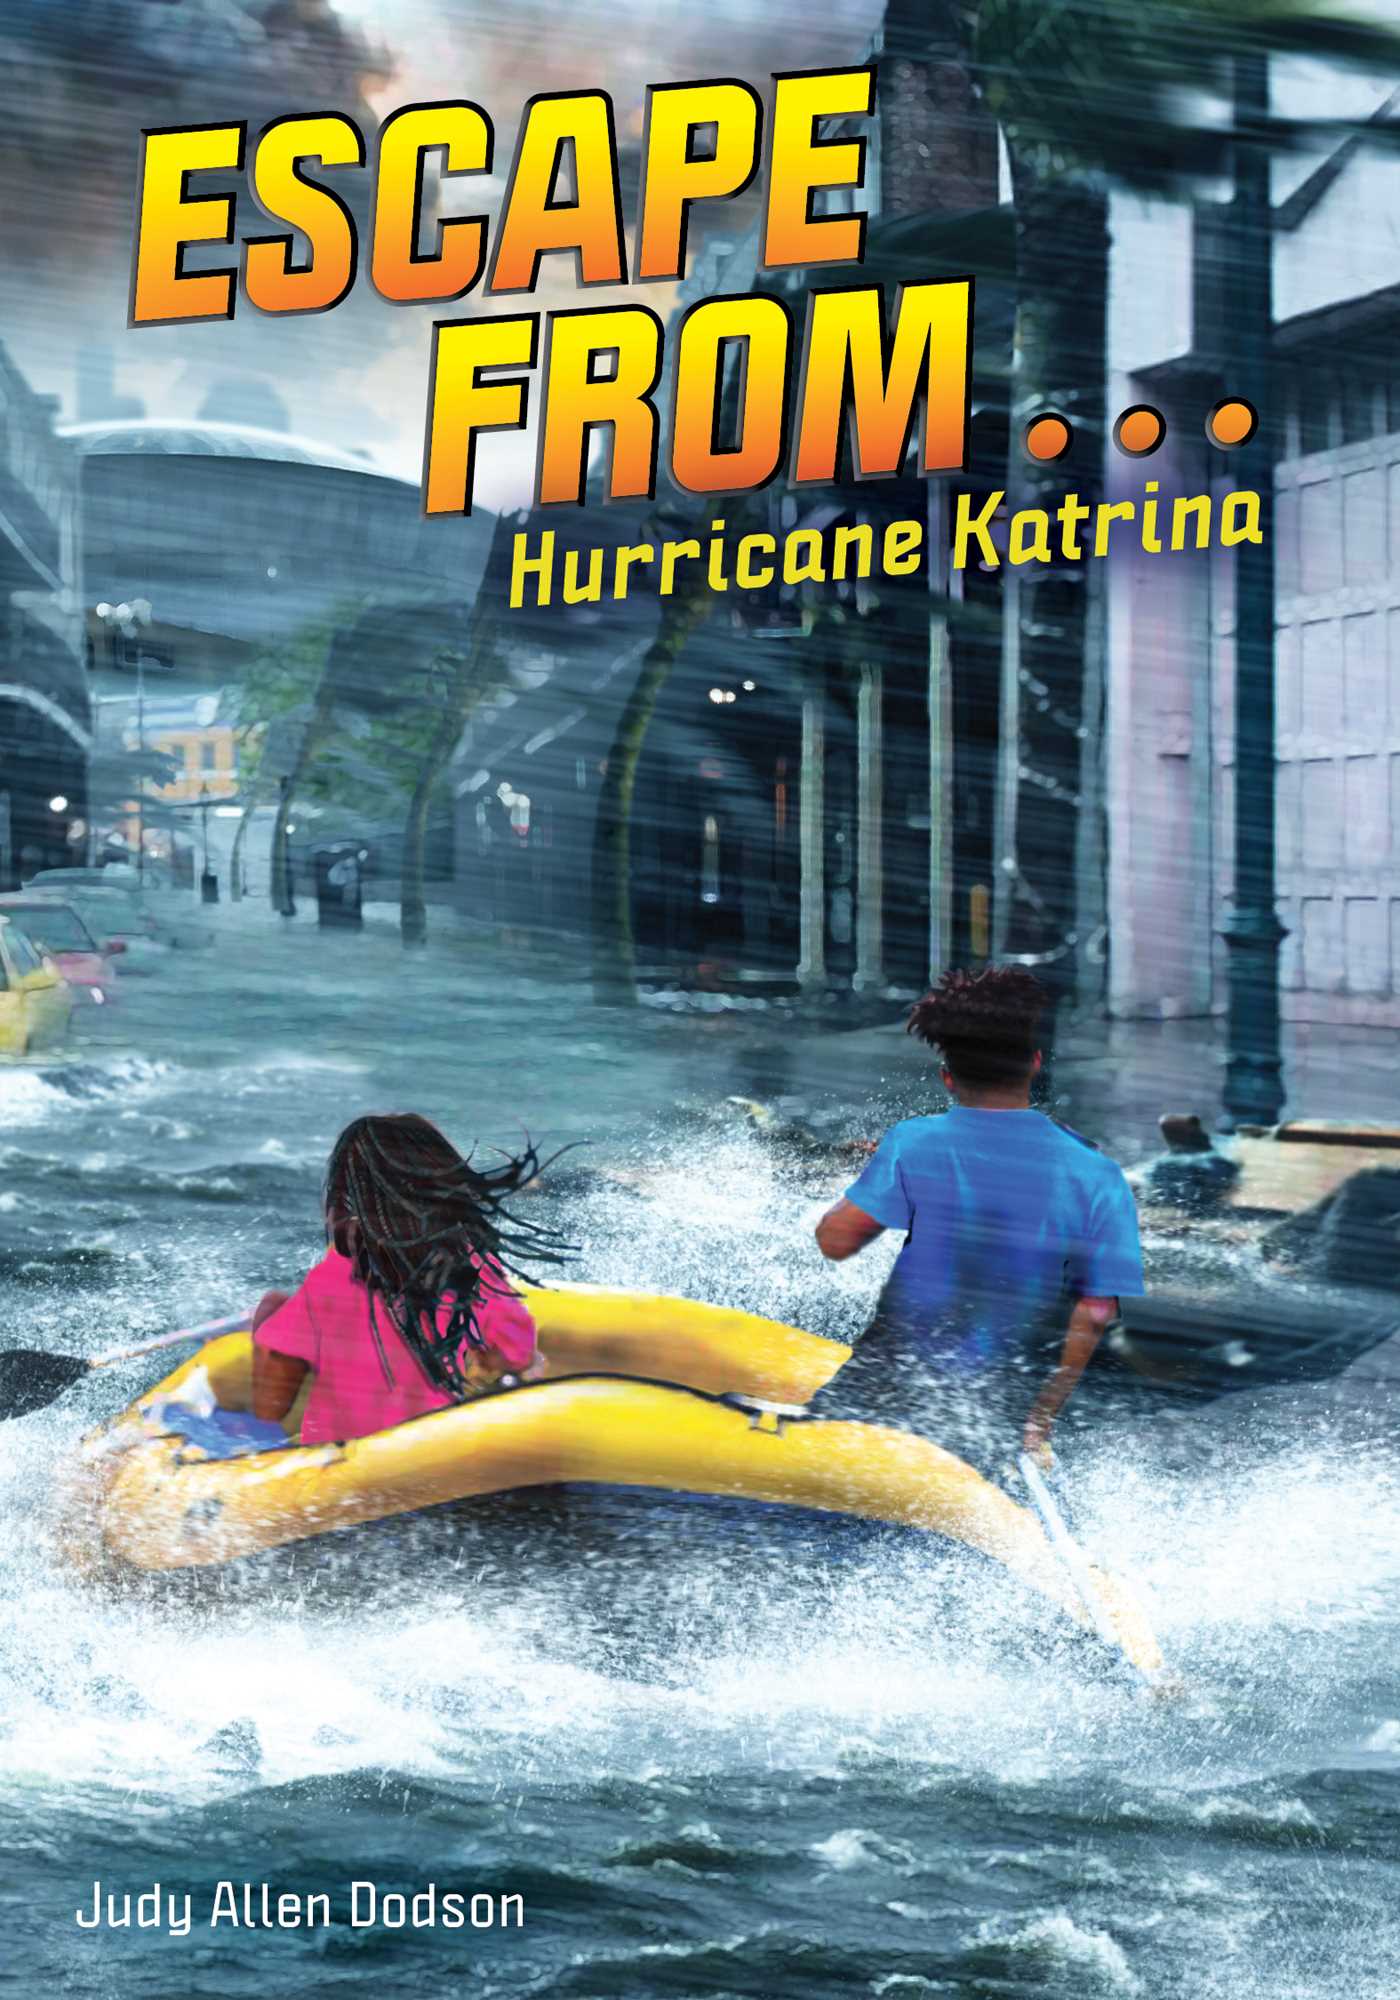 Escape from . . . Hurricane Katrina